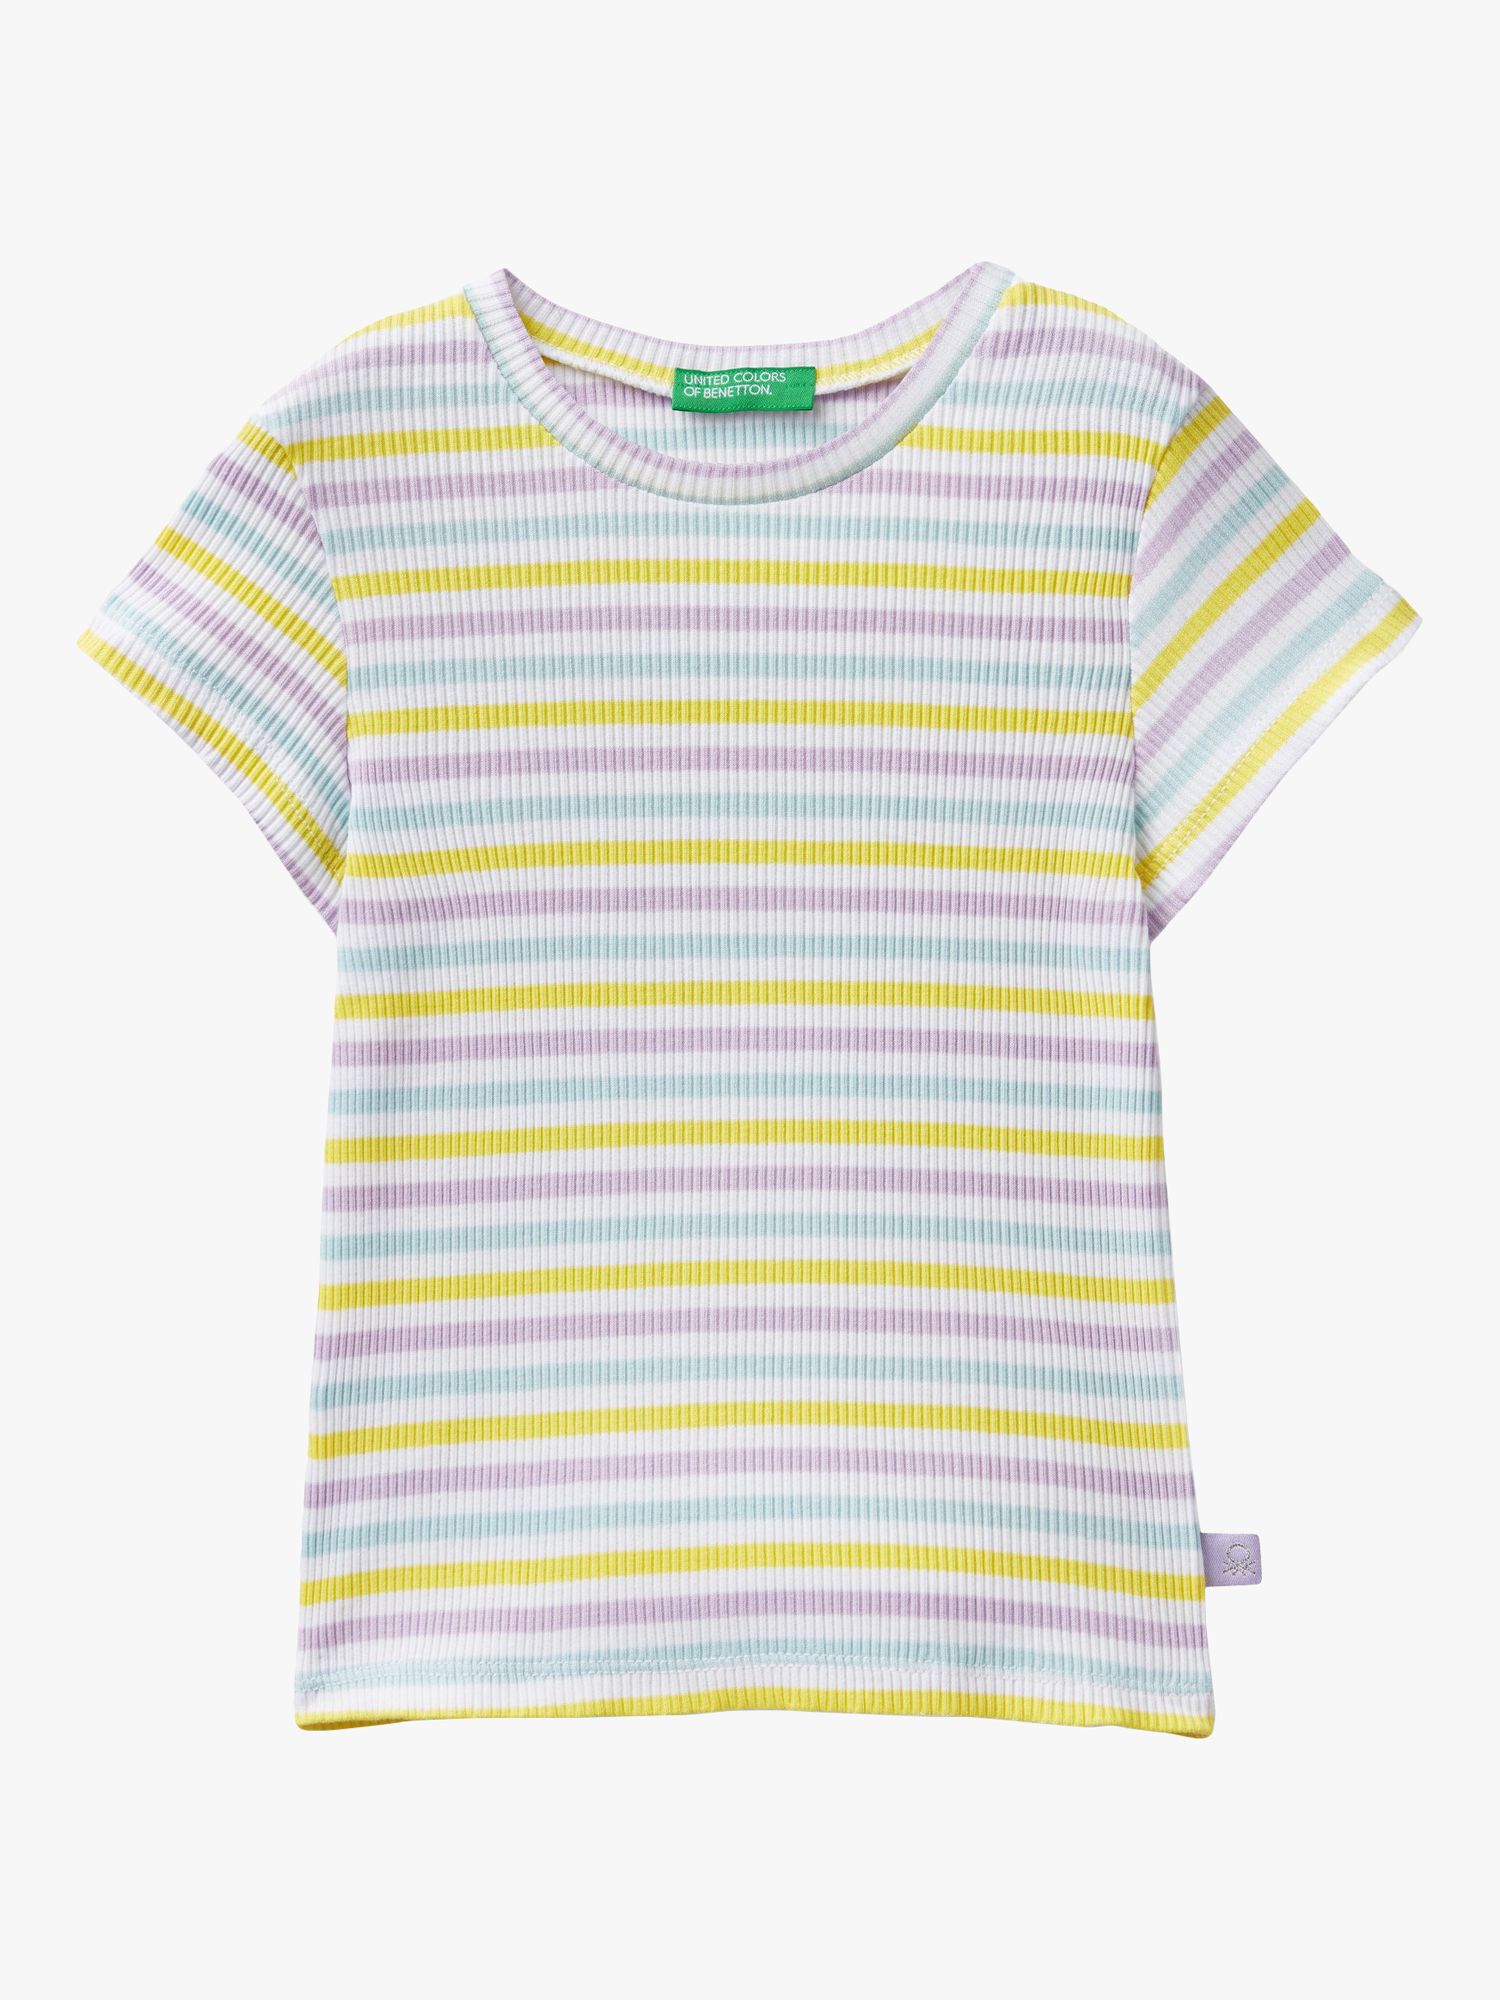 Benetton Kids' Stripe Ribbed Short Sleeve T-Shirt, Multi, 18-24 months